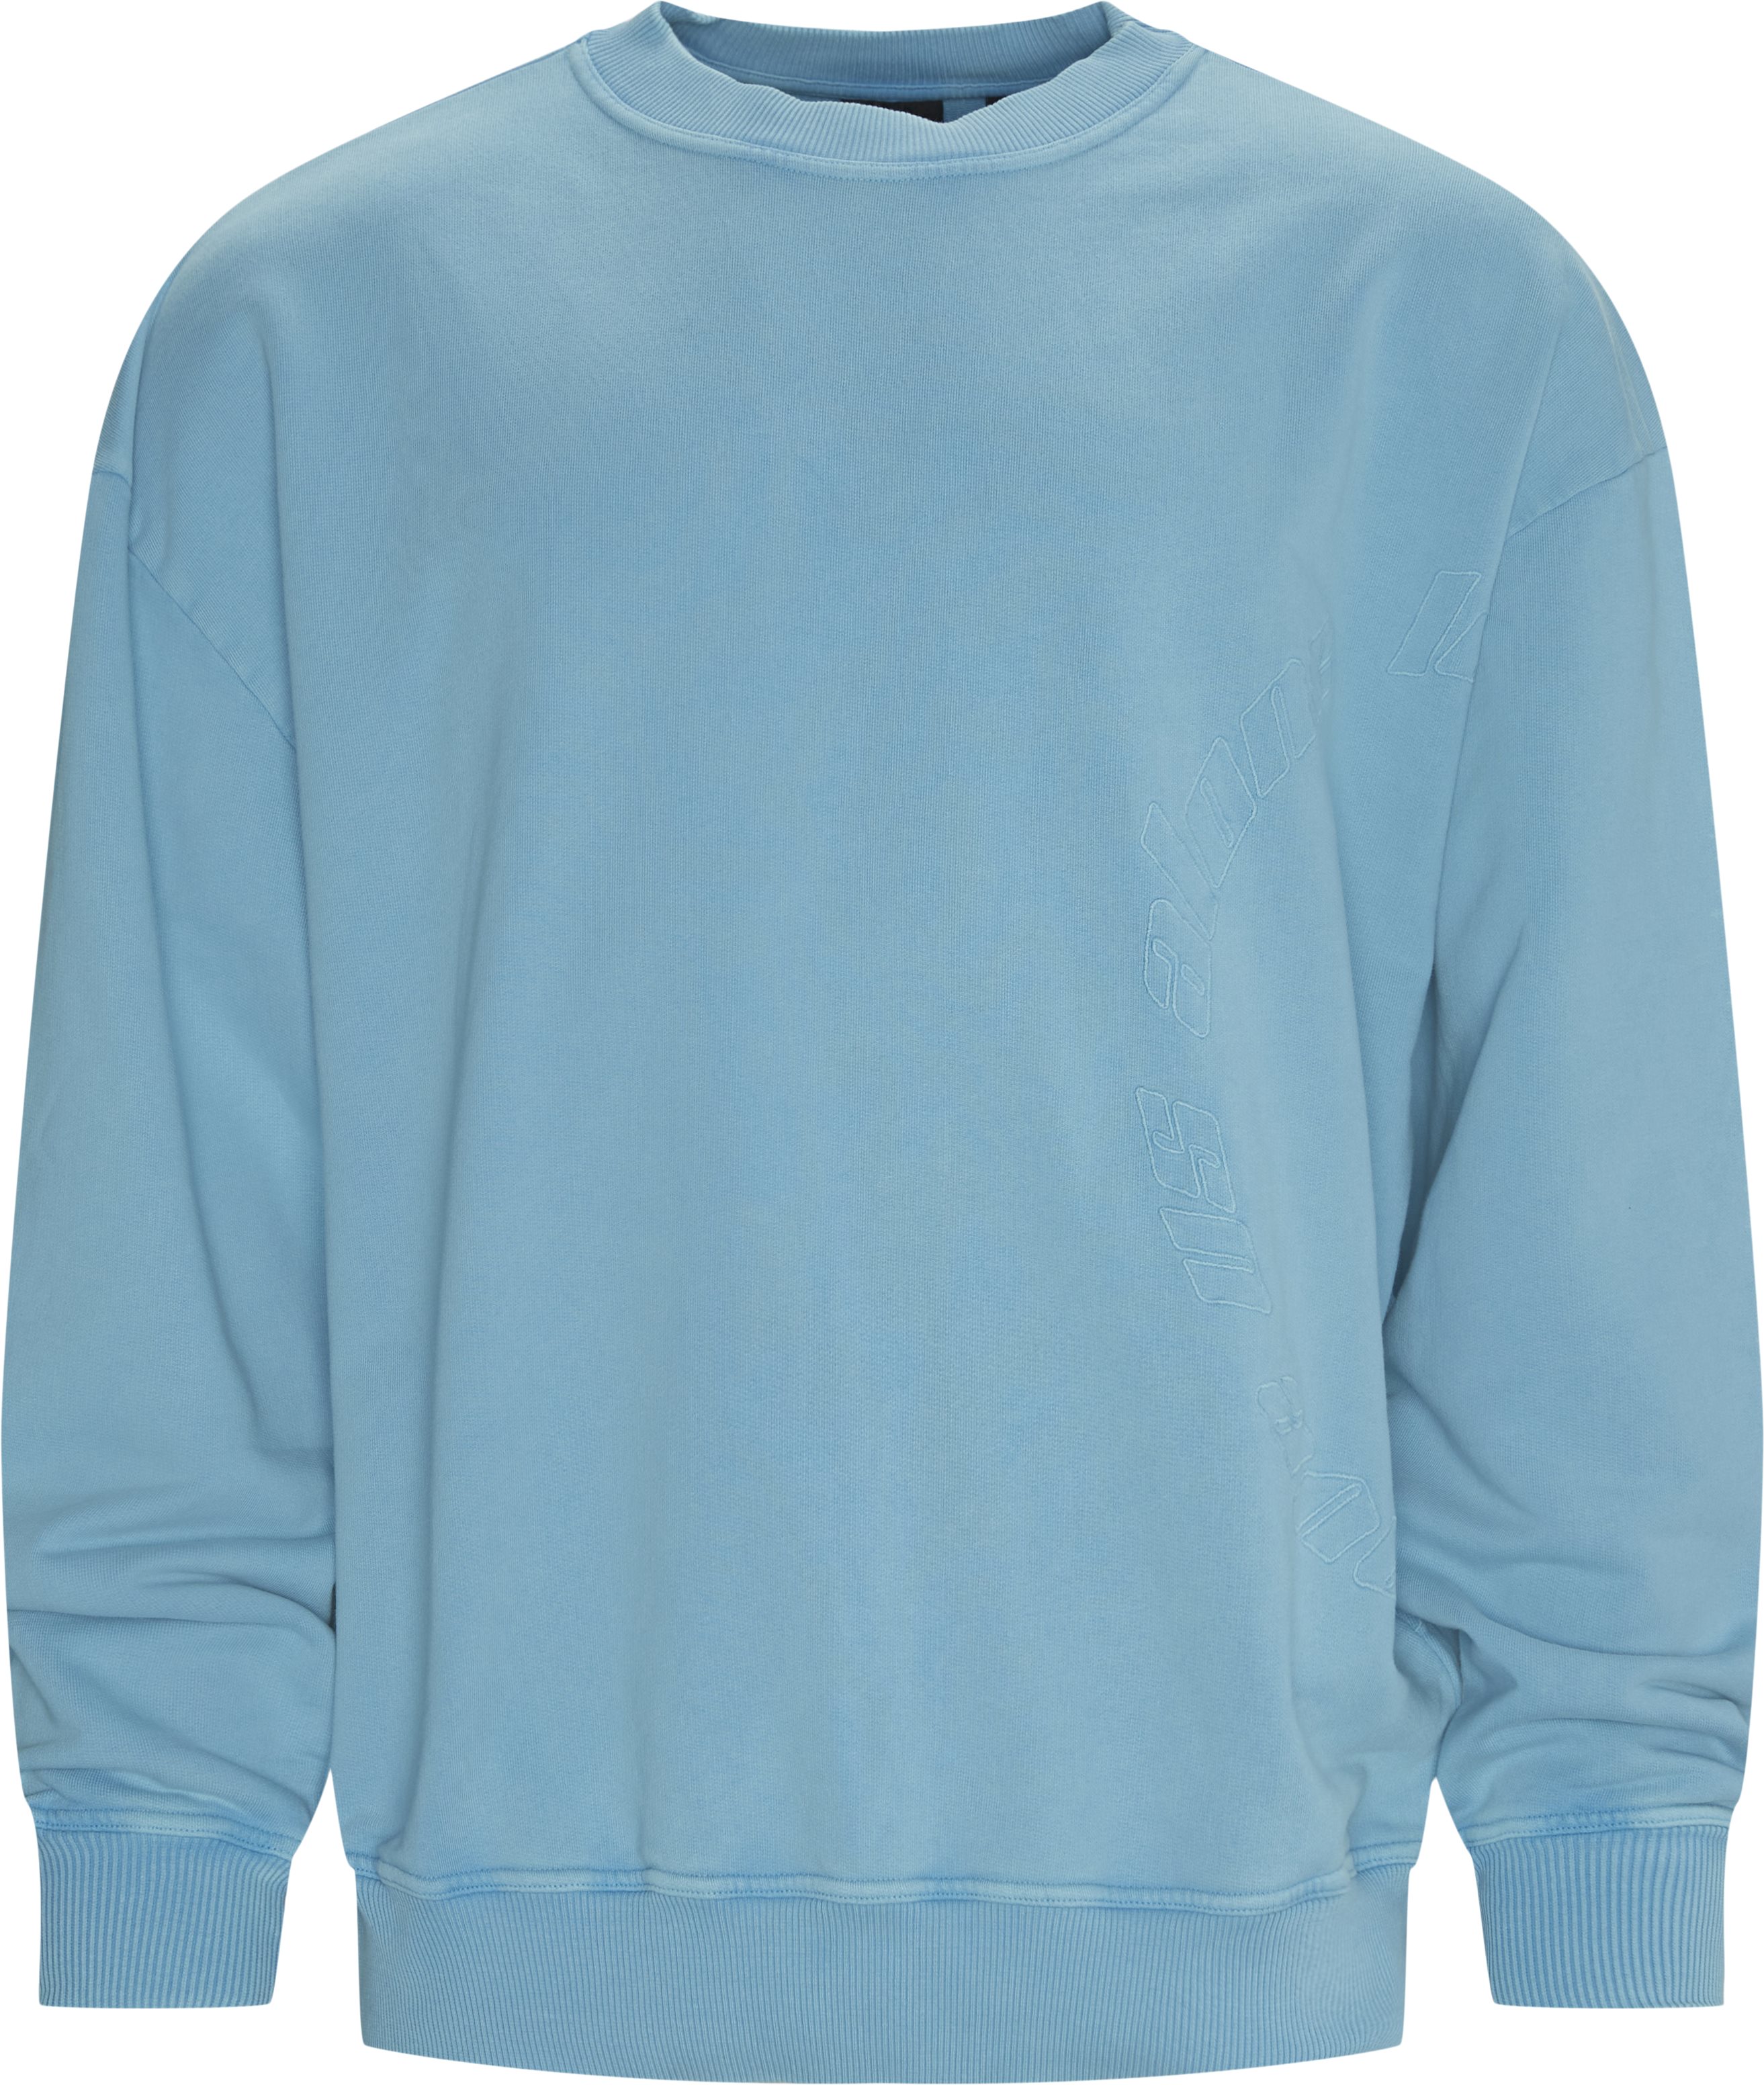 Jultröja - Sweatshirts - Regular fit - Blå